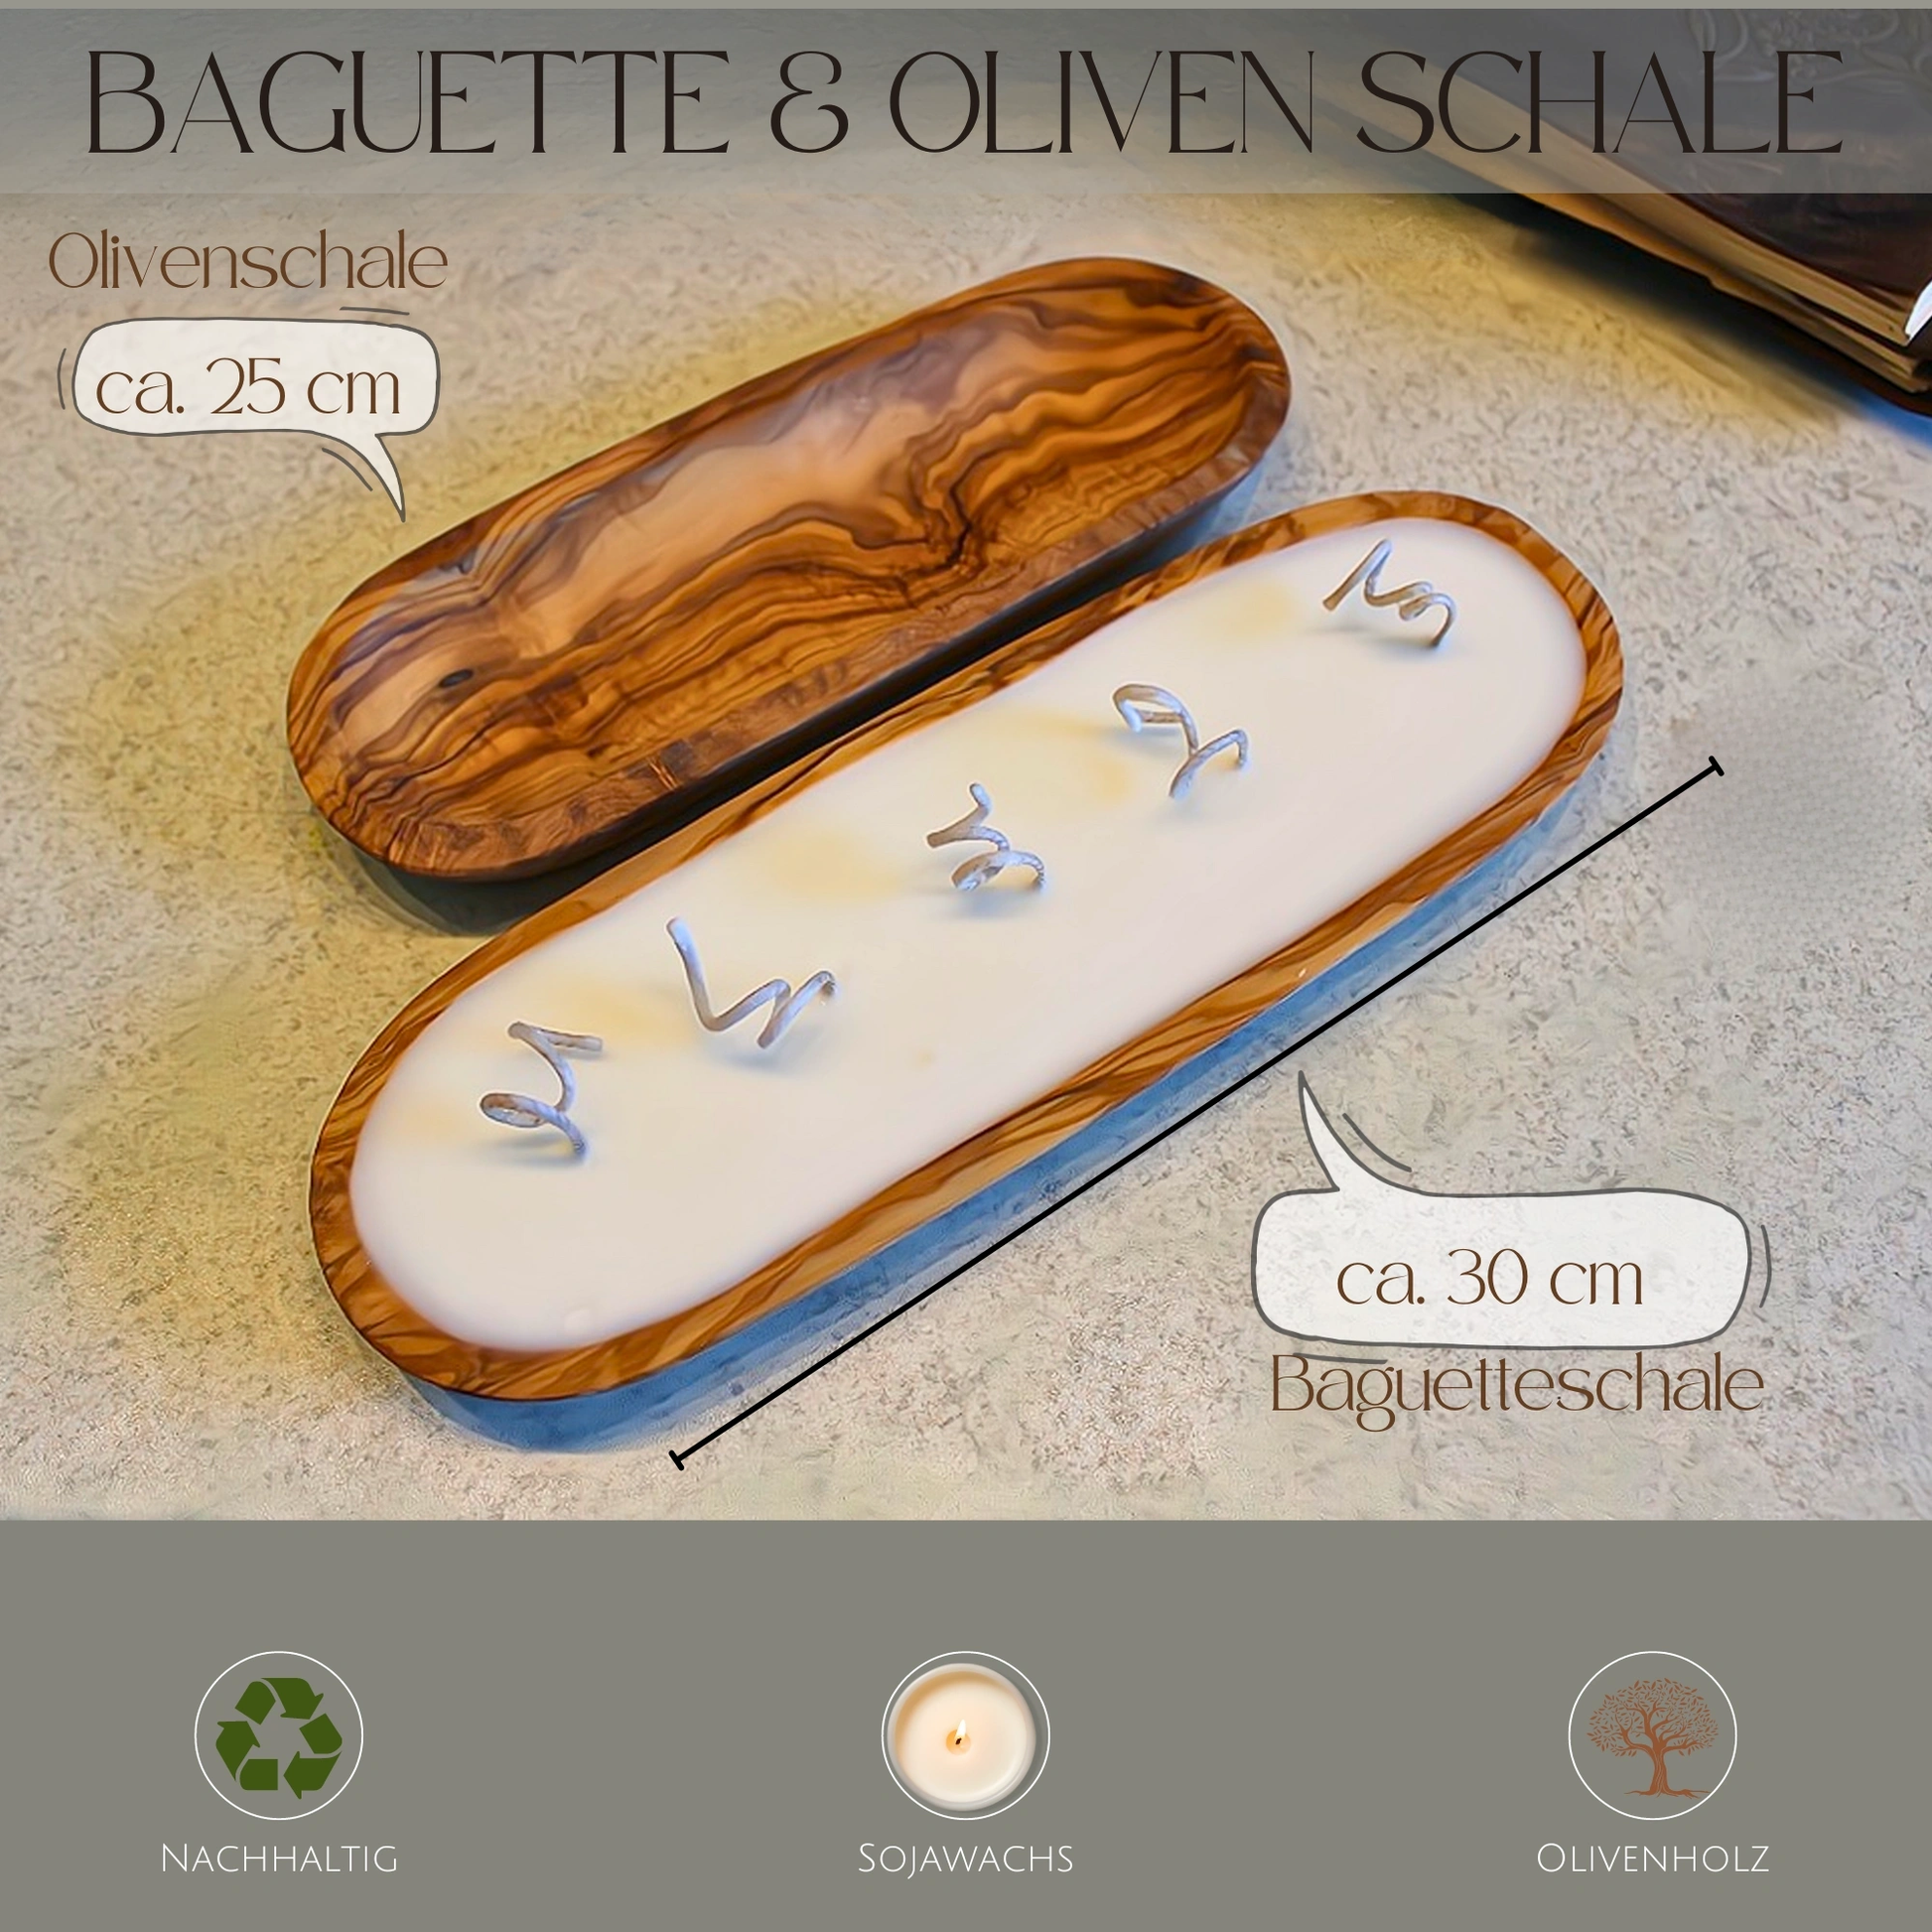 Sojawachskerze in Olivenholzschale "Baguette" 30 cm